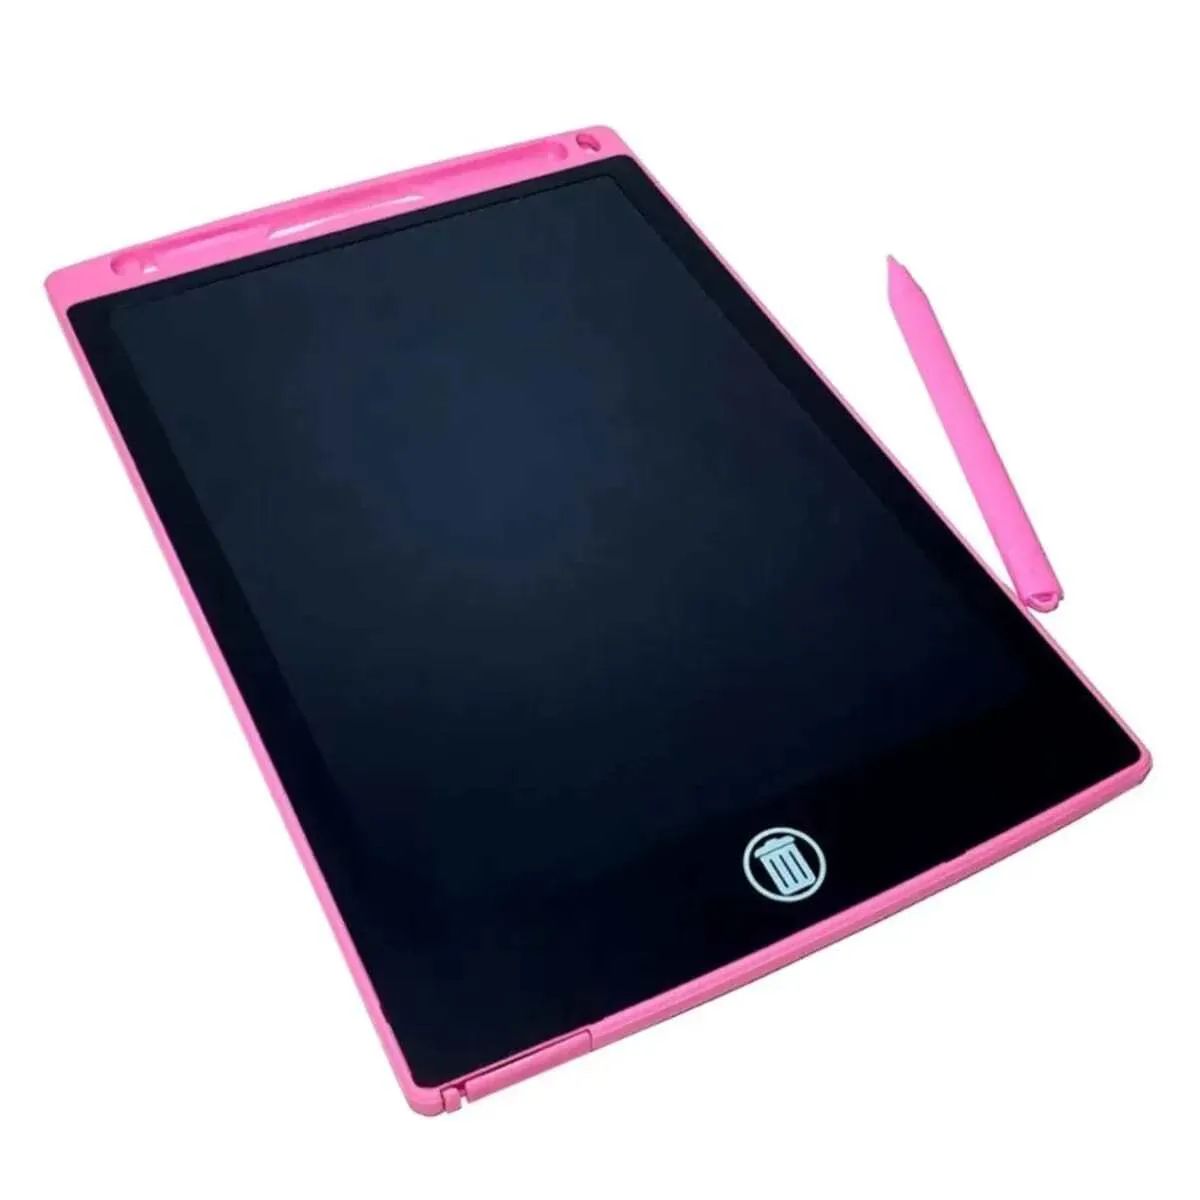 Графический планшет 8.5 LCD Writing Tablet Pink 00658 планшет для рисования xiaomi mijia lcd writing tablet 10 xmxhb01wc